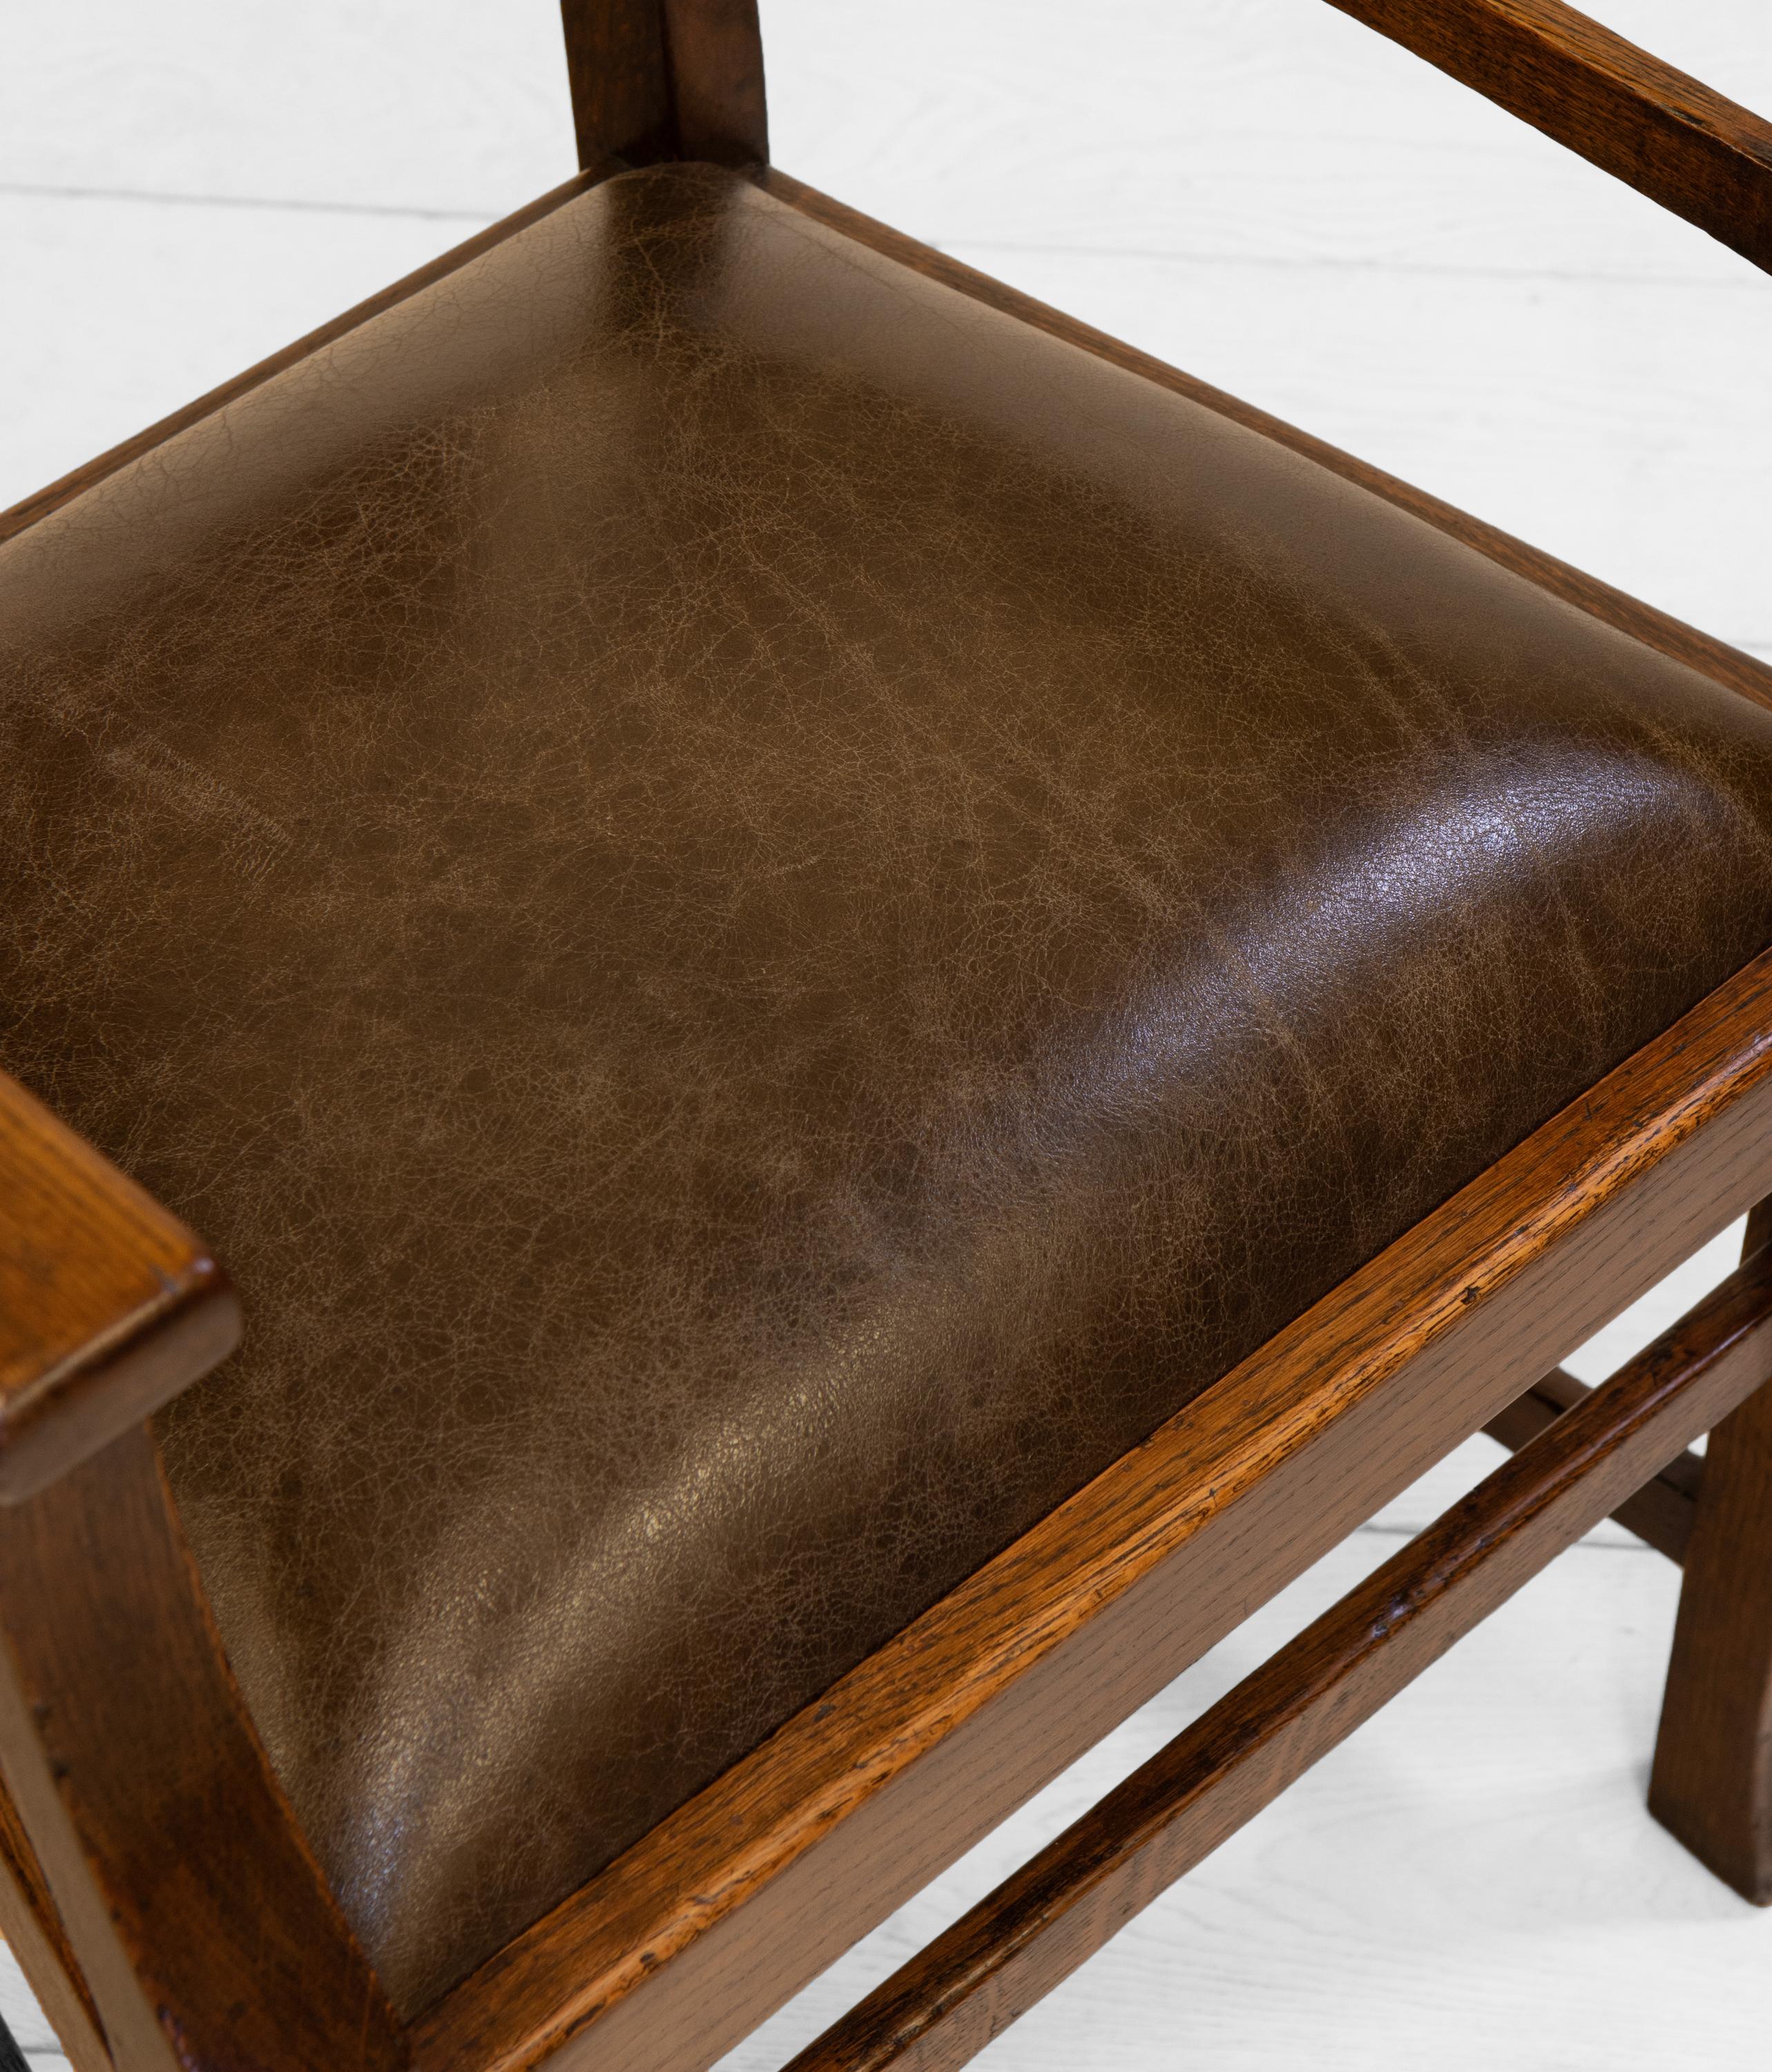 Art & Crafts Oak and Leather Desk Chair In The Richard Riemerschmid Manner 1